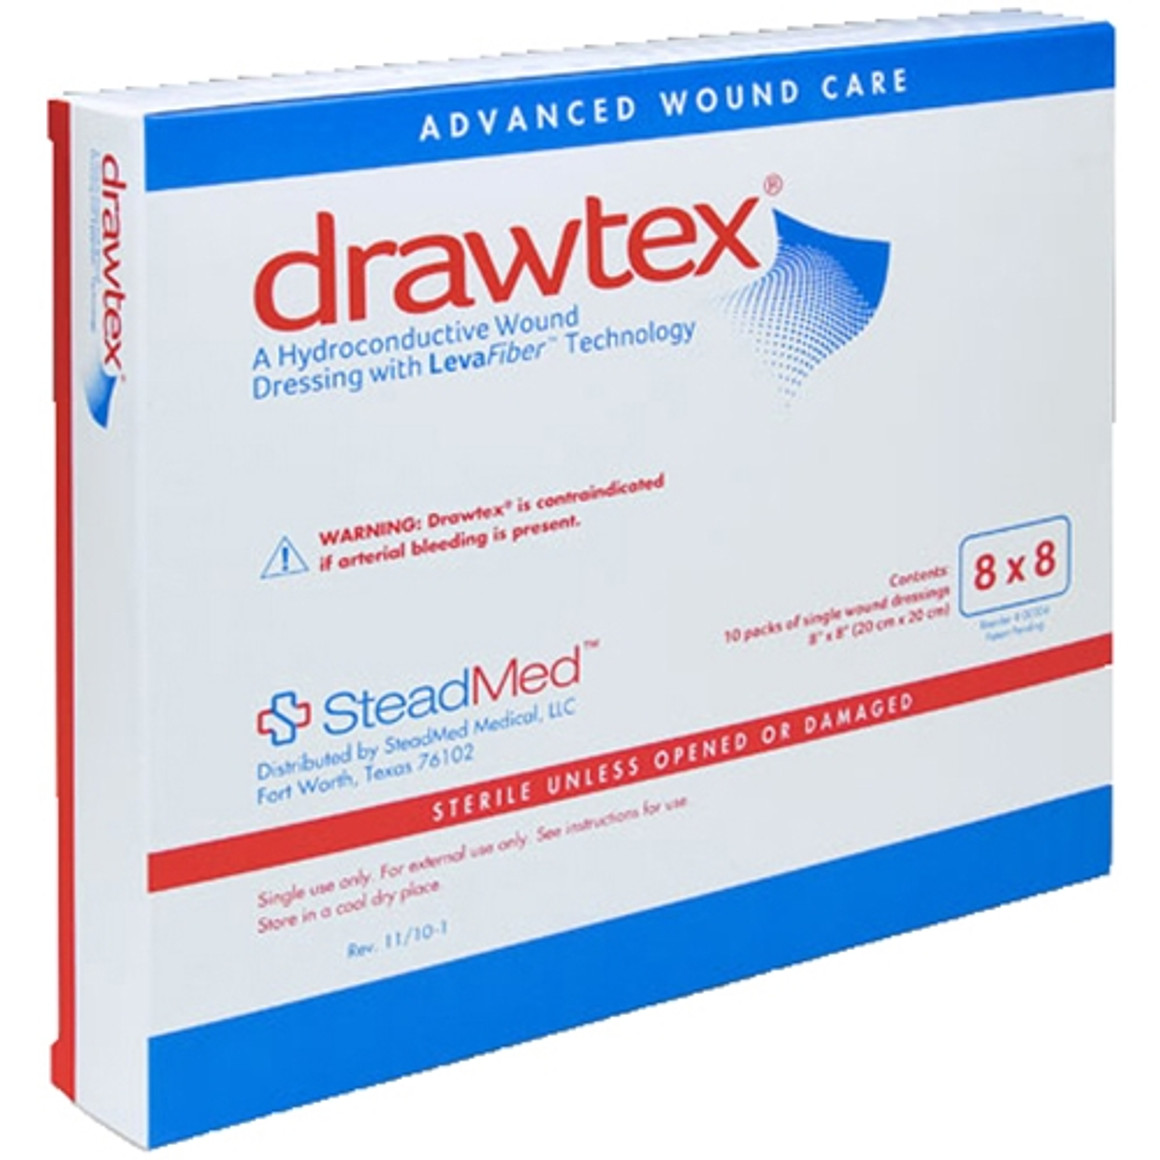 Drawtex® Hydroconductive Wound Dressing 8" x 8", With LevaFiber Technology